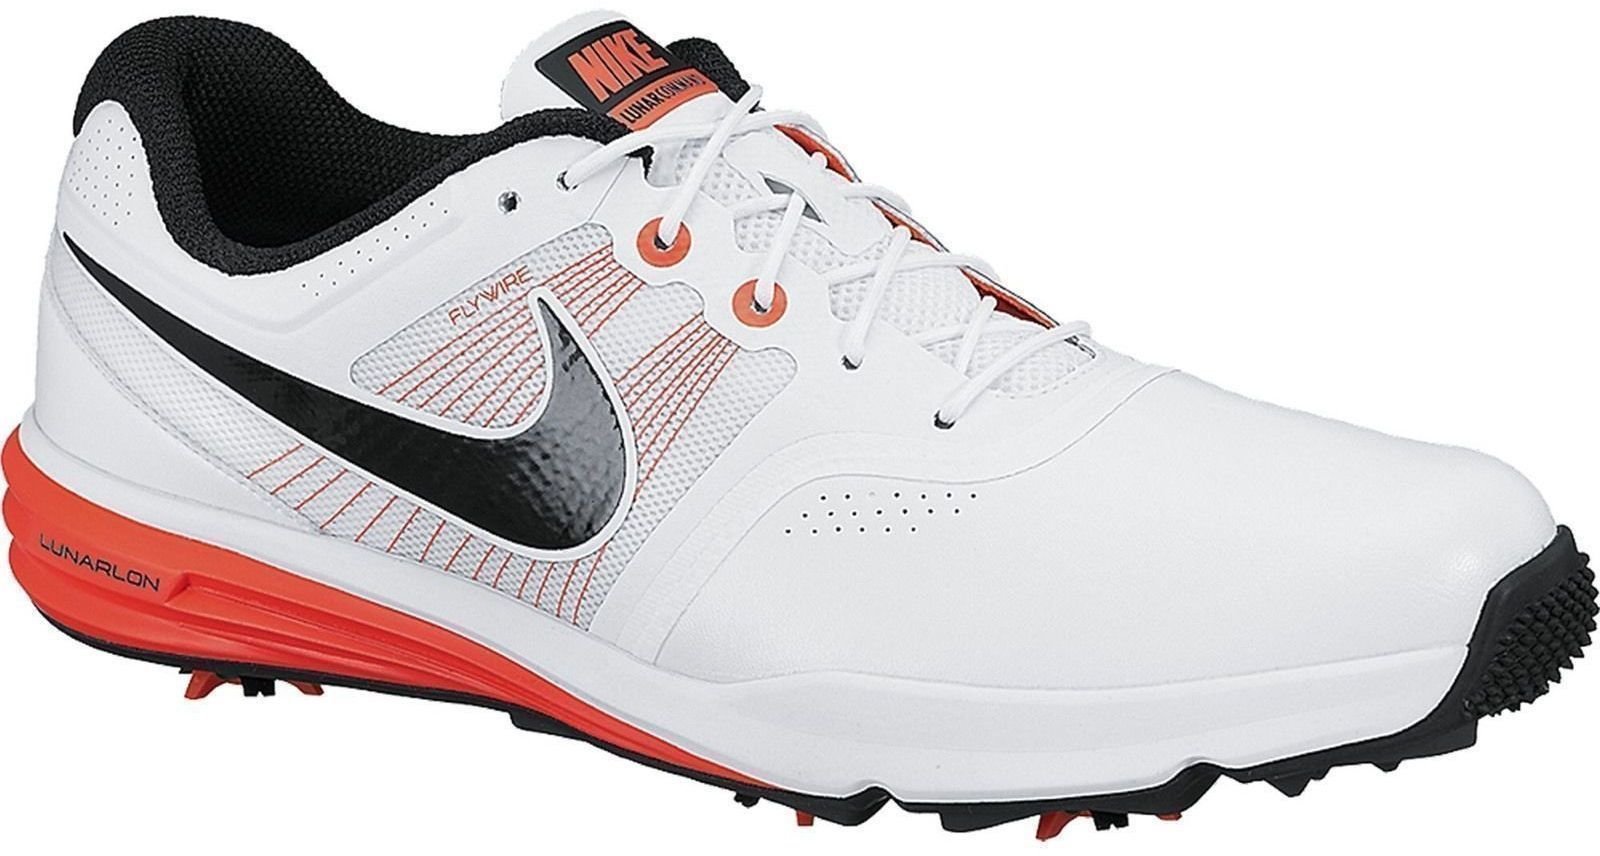 Herren Golfschuhe Nike Lunar Command Golfschuhe Herren White/Black/Crimson US 11